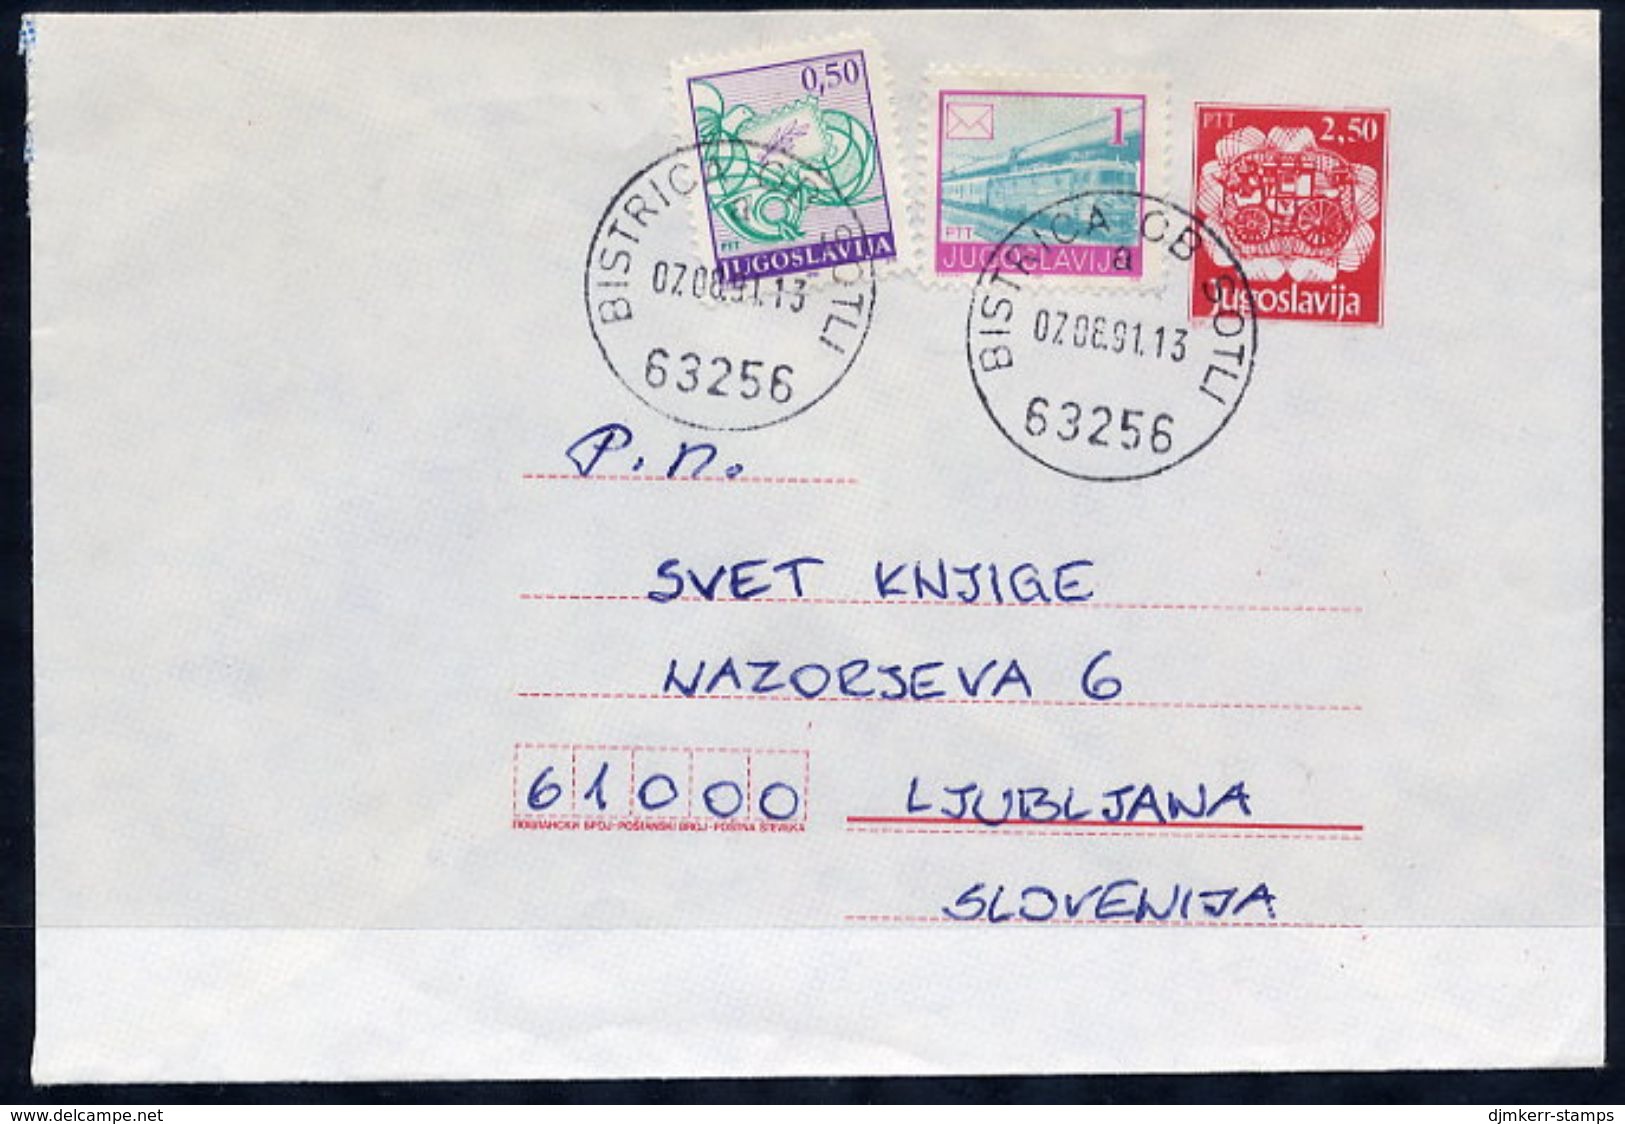 YUGOSLAVIA 1991 Mailcoach 2.50 D. Stationery Envelope Used With Additional Franking.  Michel U97 - Ganzsachen